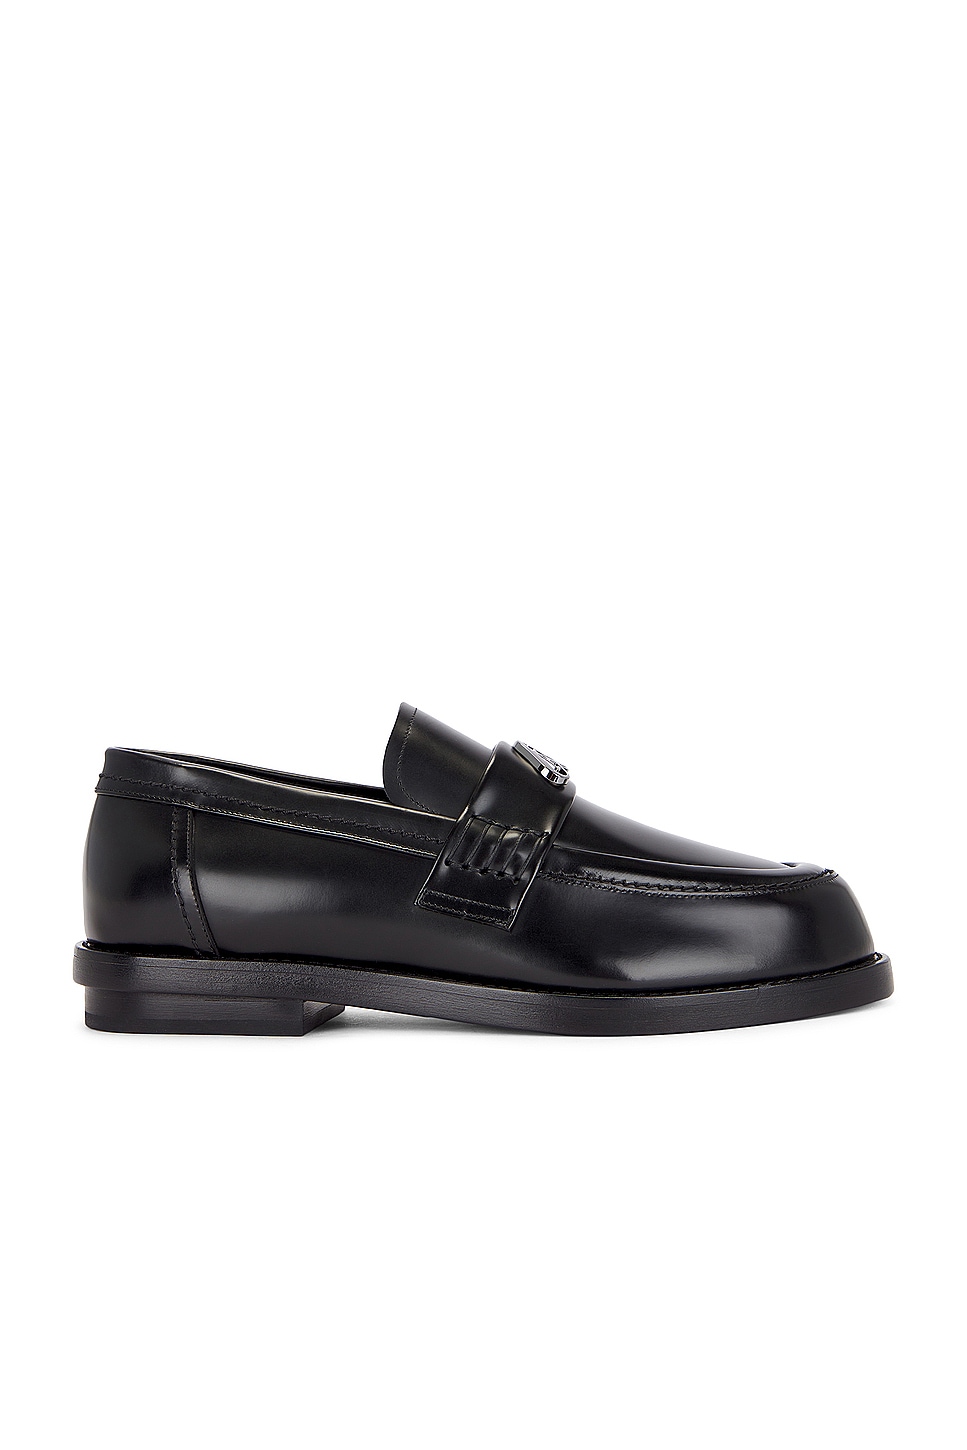 Image 1 of Alexander McQueen Leather Shoe in Black